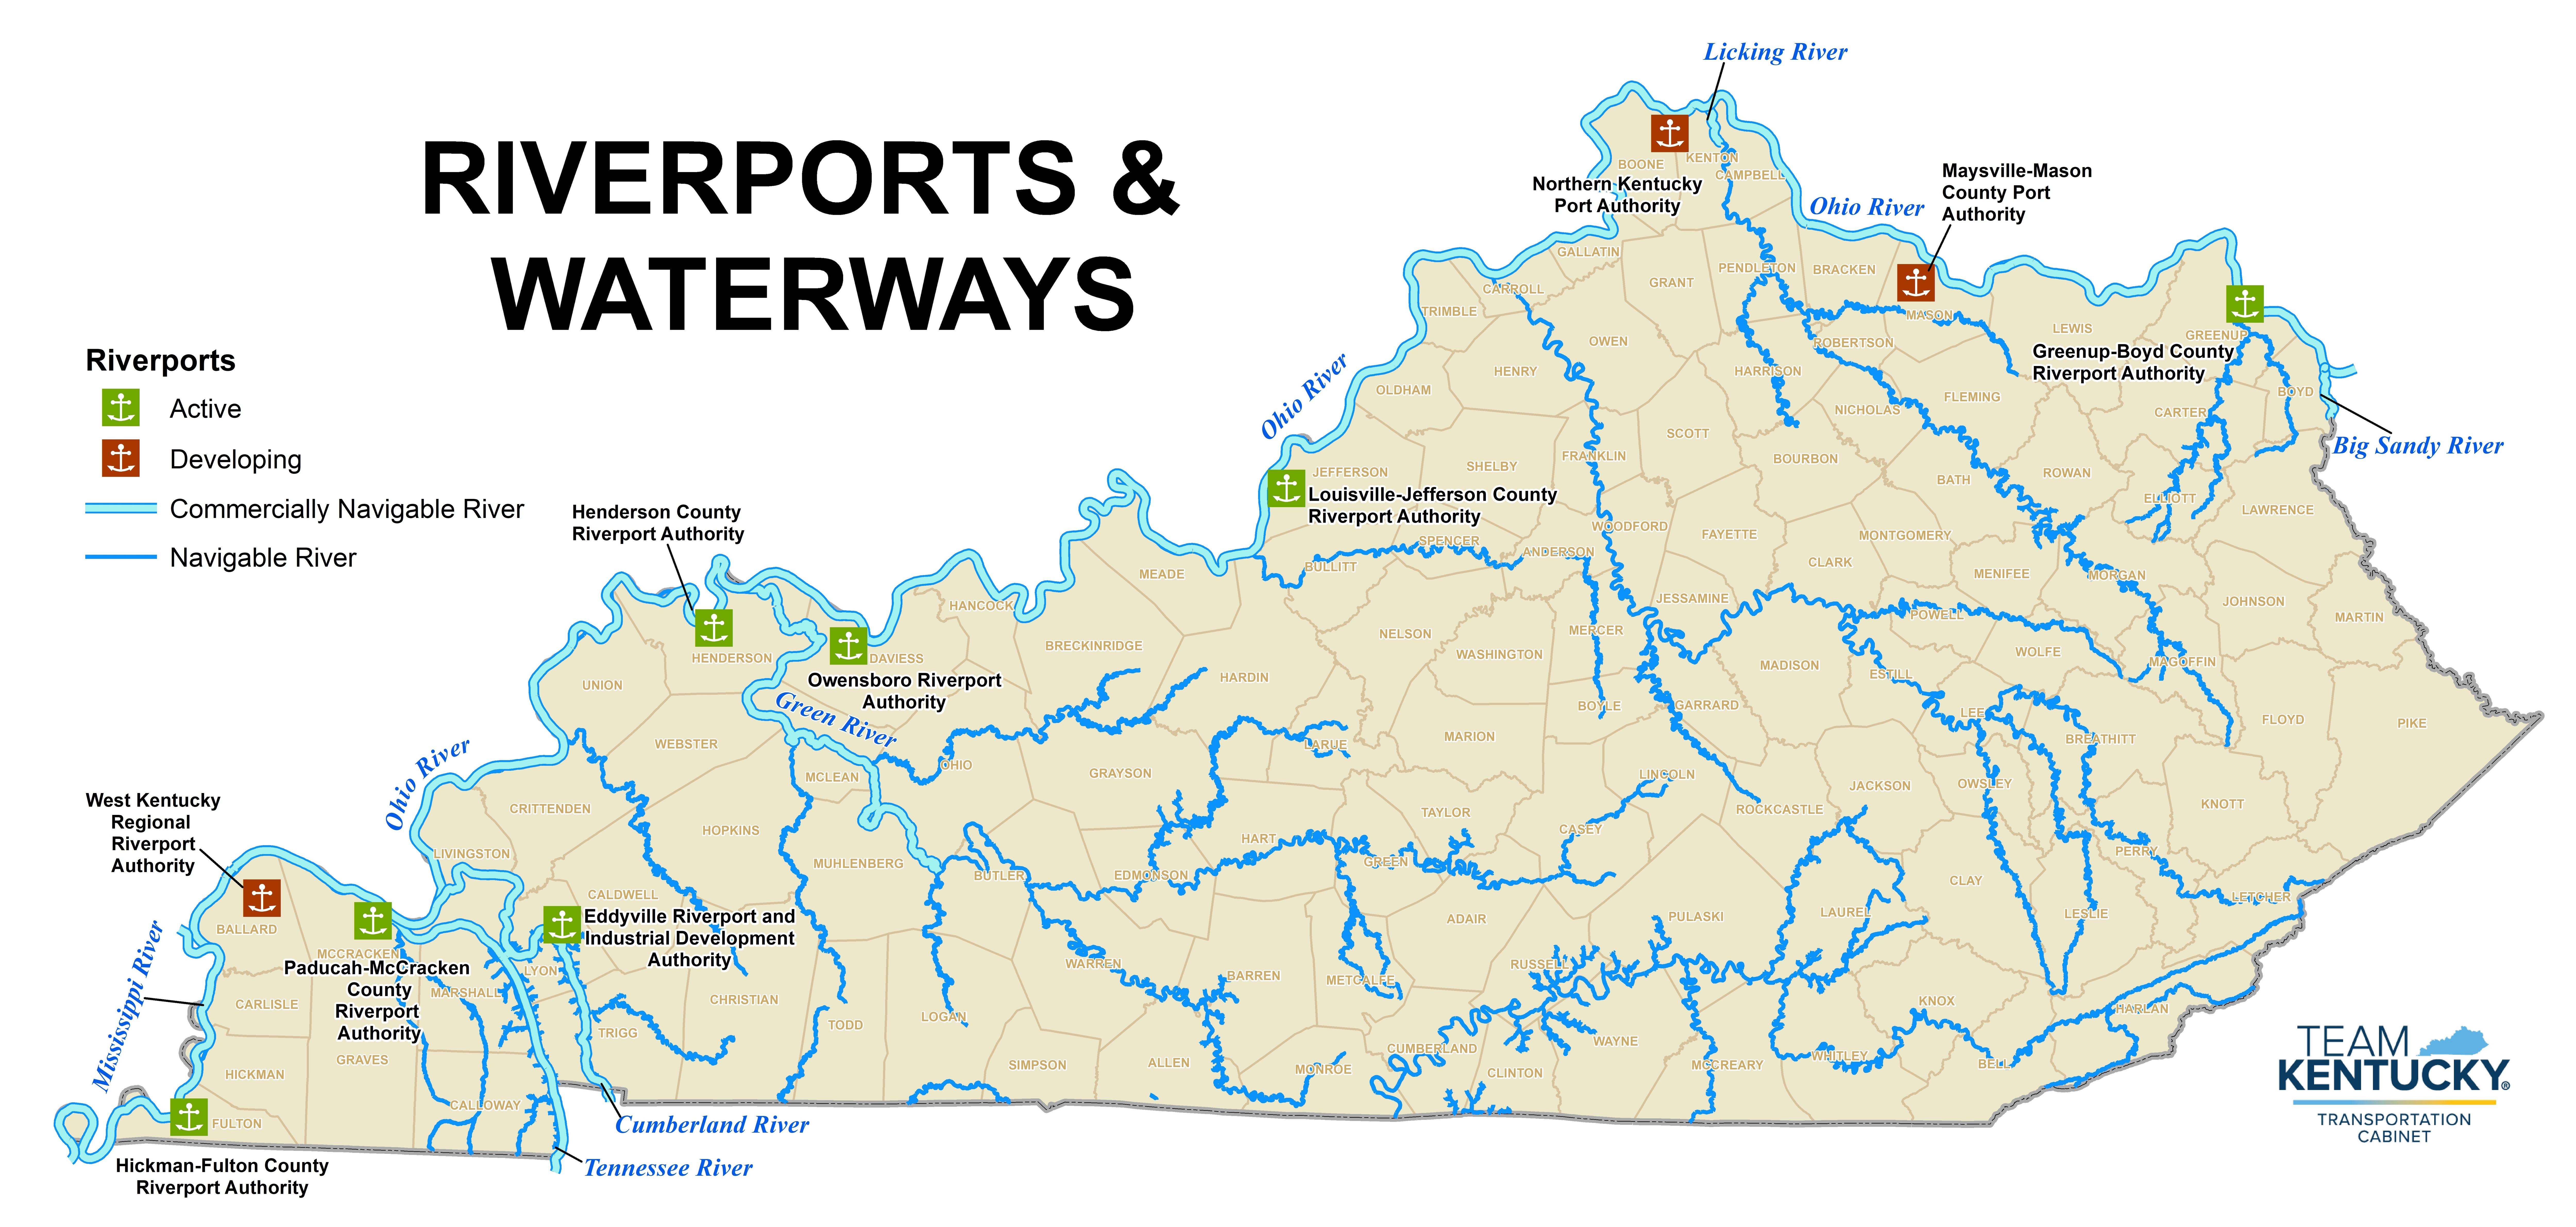 Riverports & Waterways Image 11.23.jpg